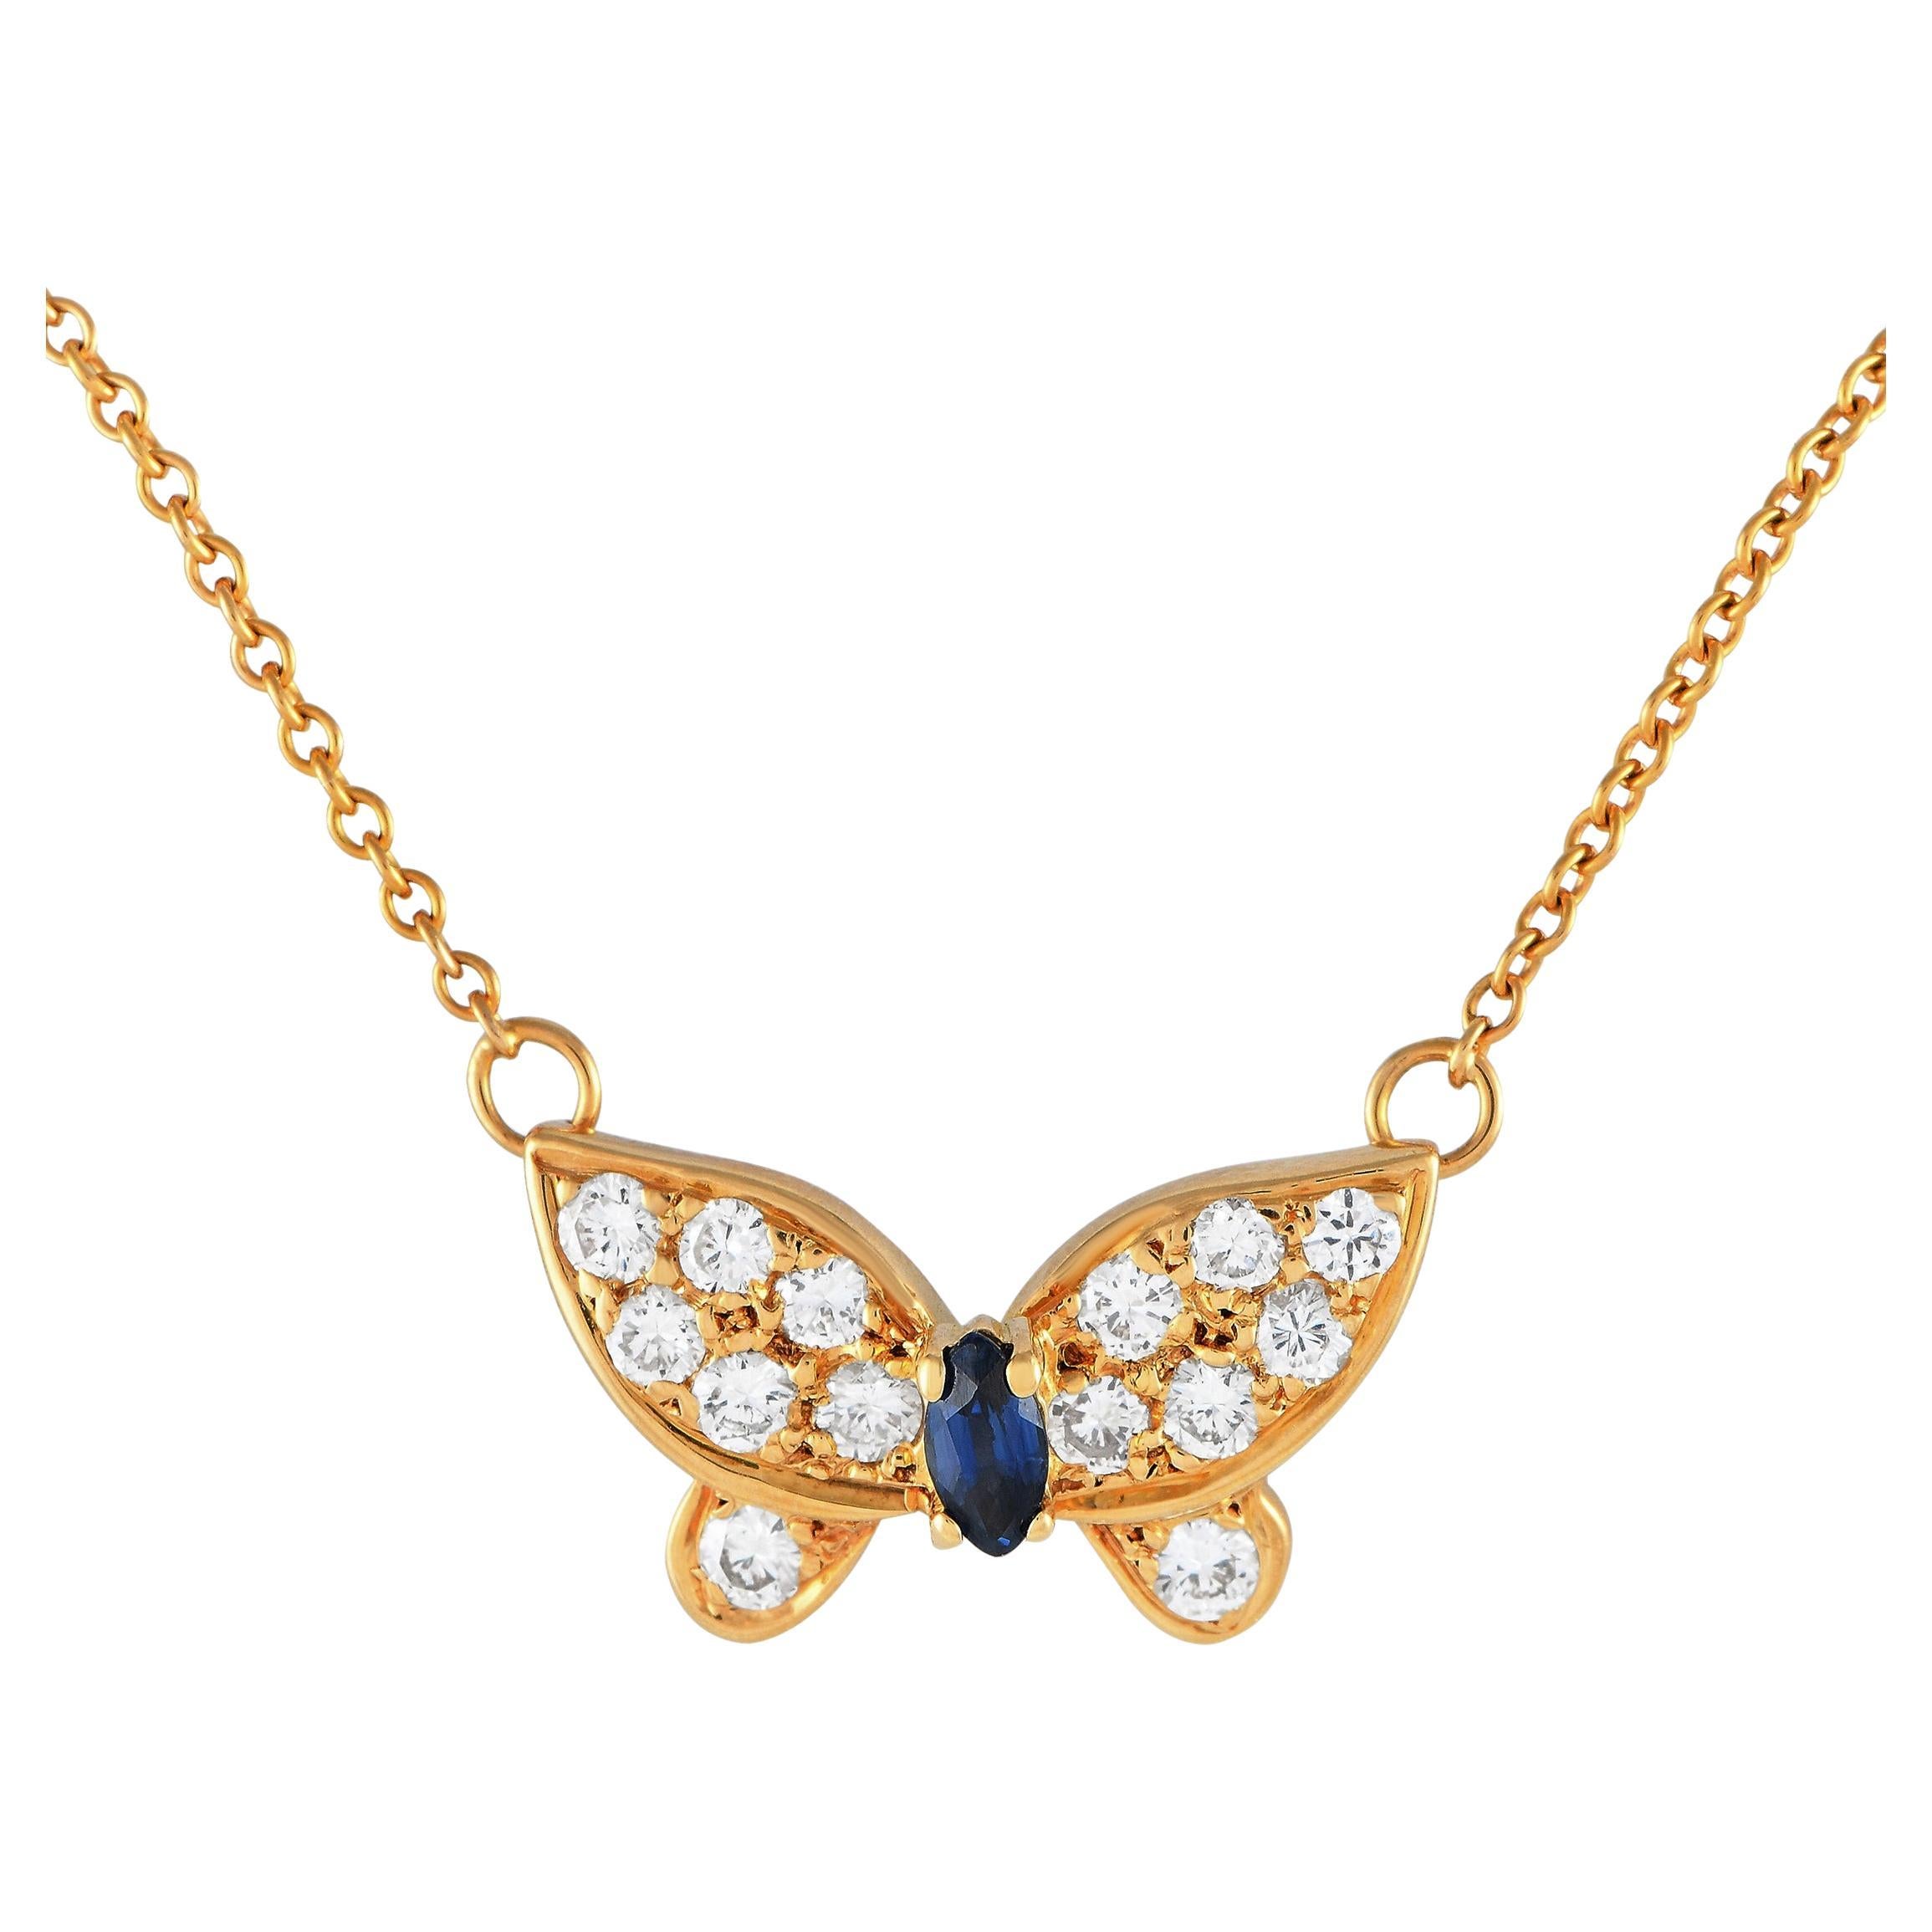 Van Cleef & Arpels, collier pendentif fleur en or blanc 18 carats avec diamants de 2,37 carats